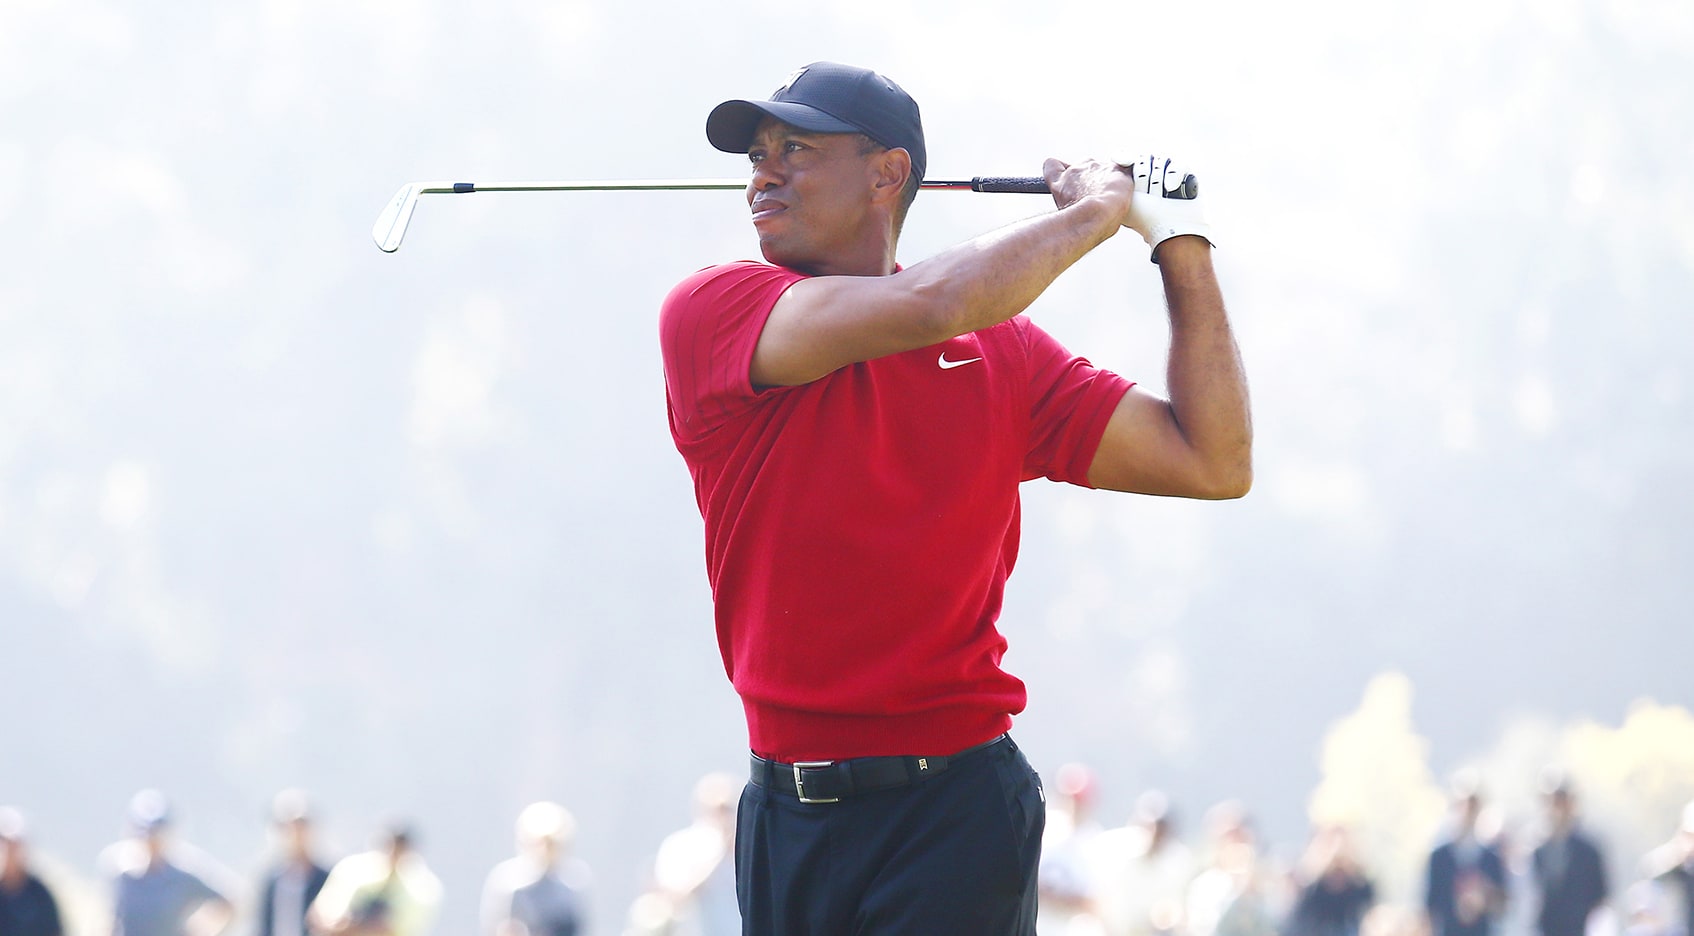 Peers excited to see Tiger Woods play The Genesis Invitational